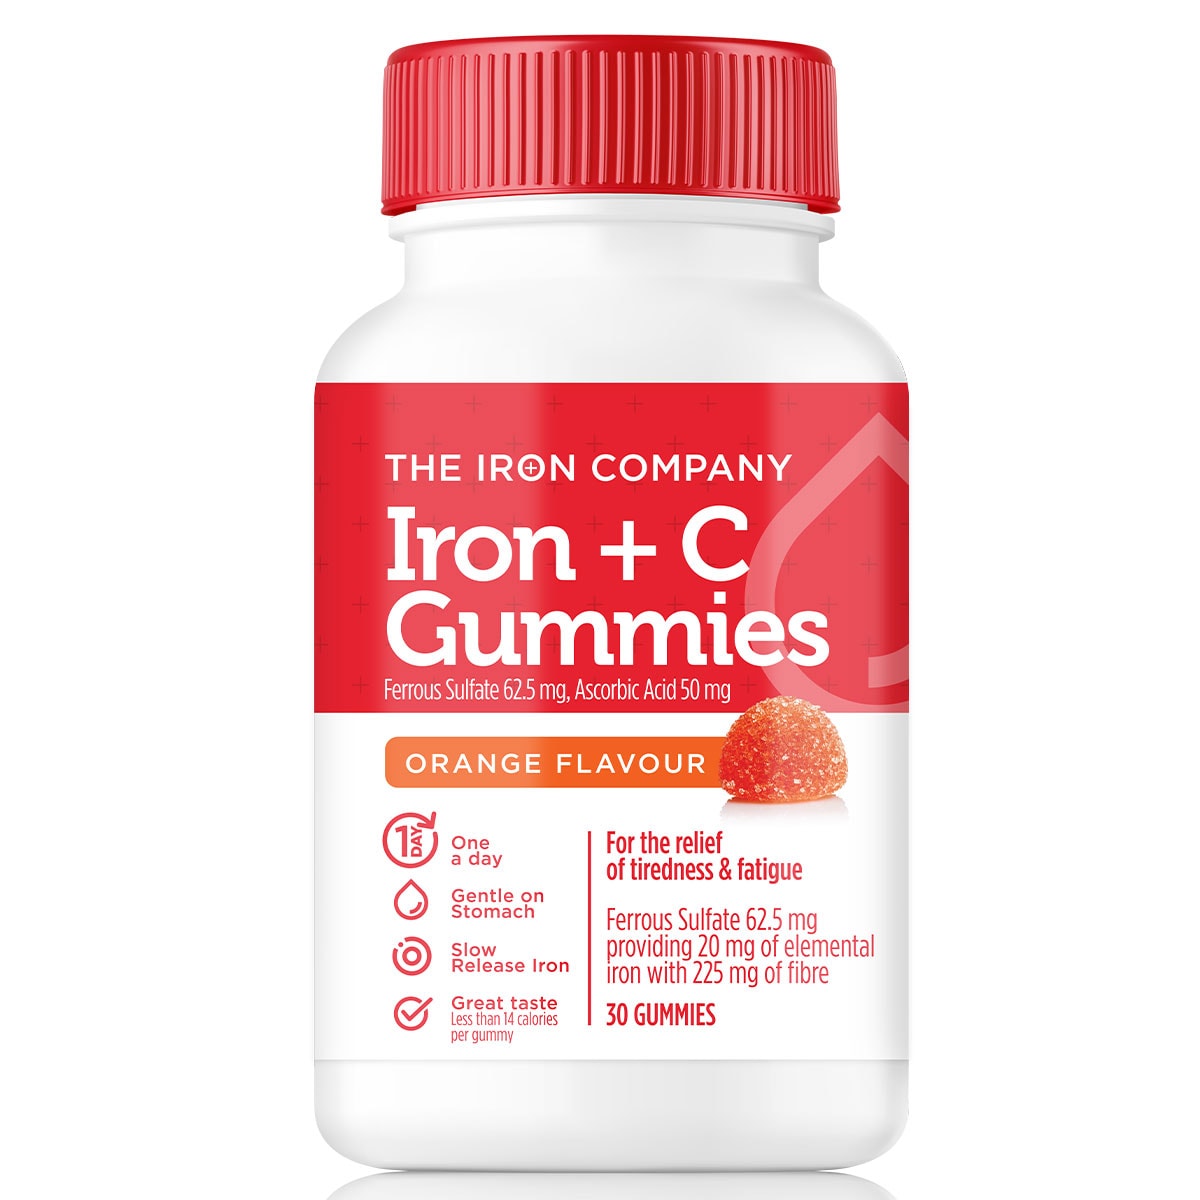 The Iron Company Iron Gummies + Vitamin C Orange 30 Pack